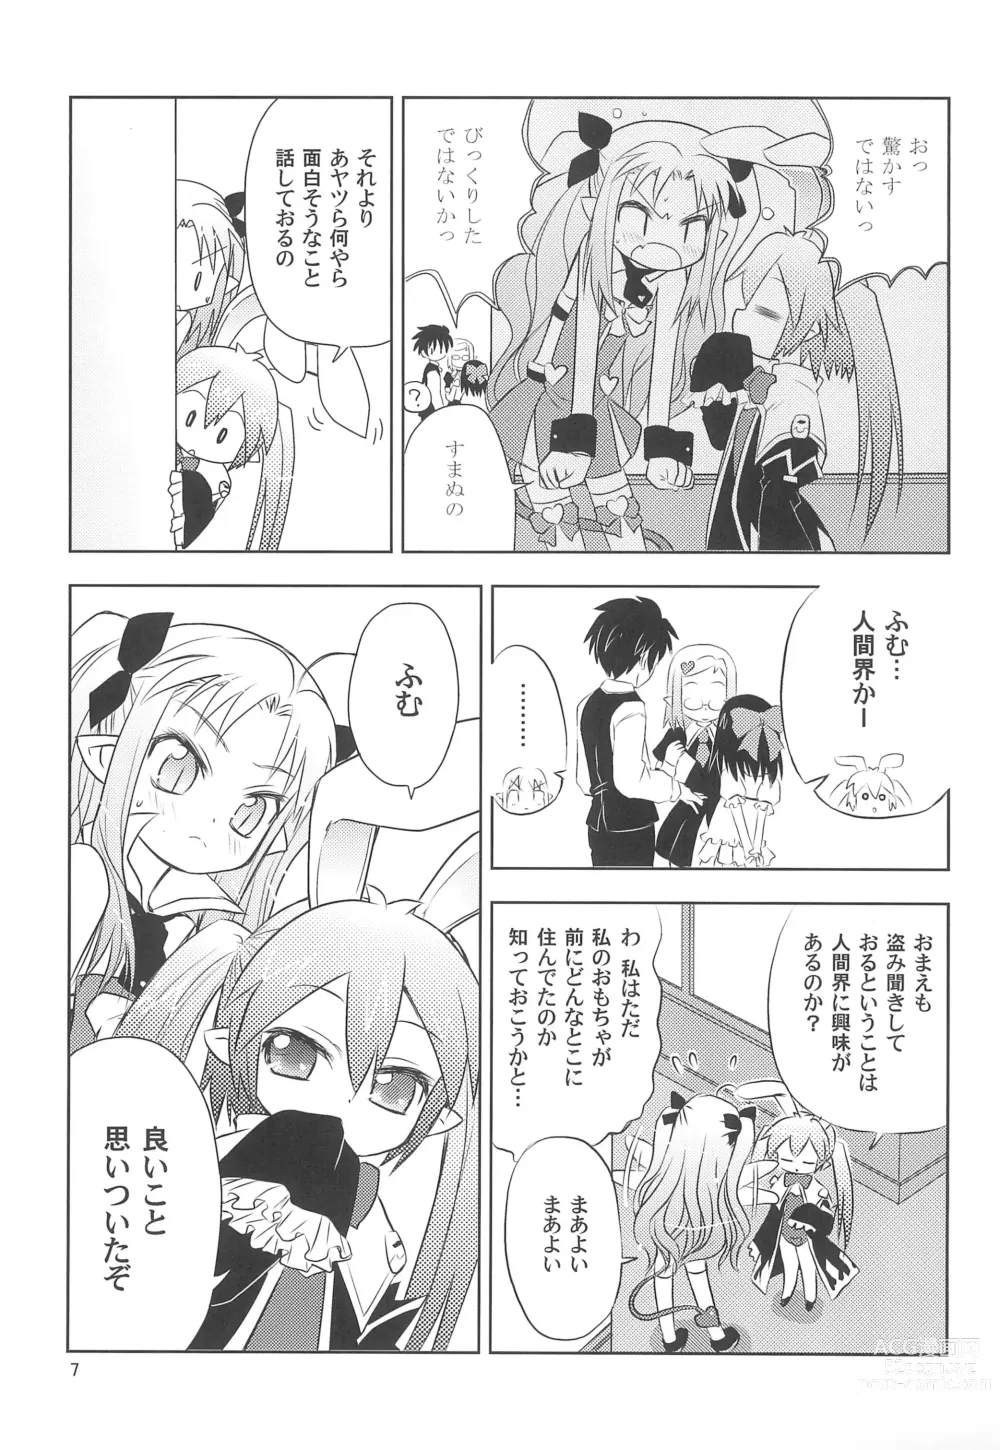 Page 7 of doujinshi Maigo no Maigo no Hime-sama Plus